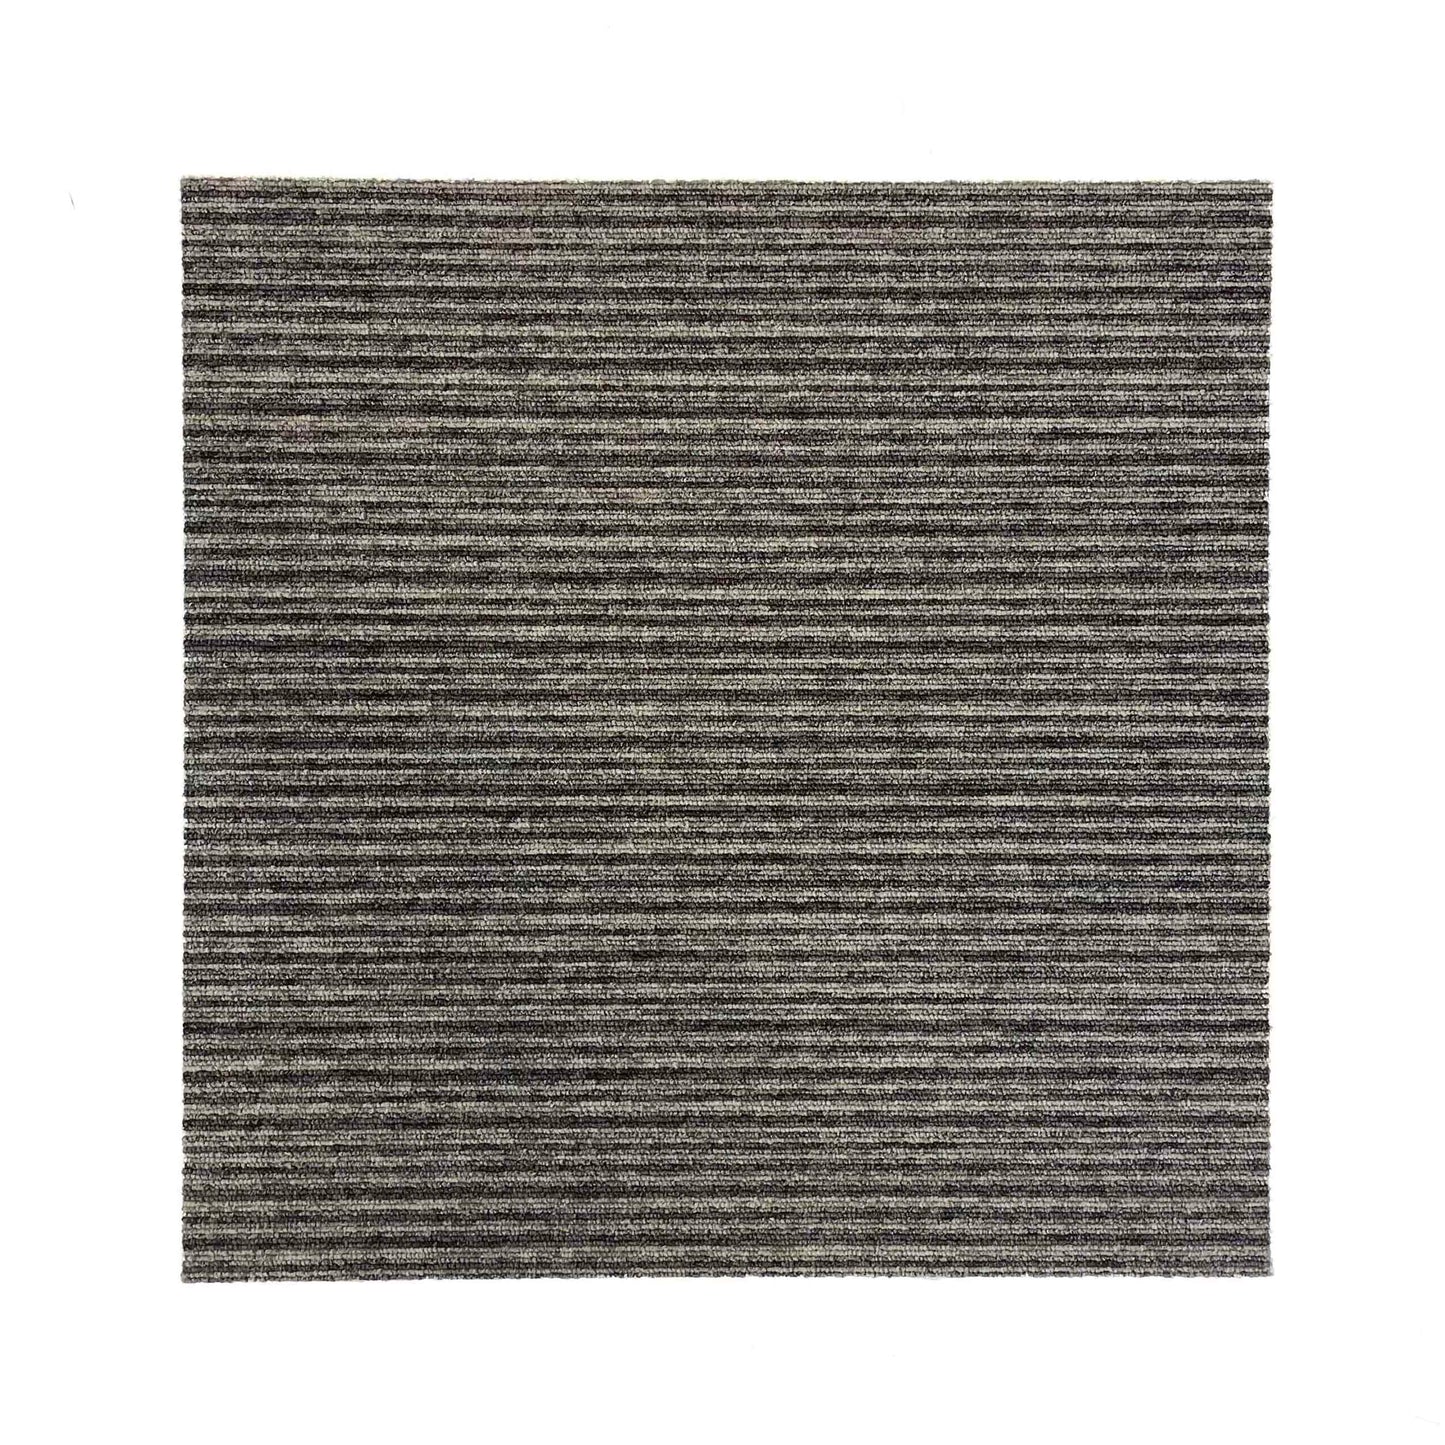 Brown and Grey Stripe Carpet Tiles